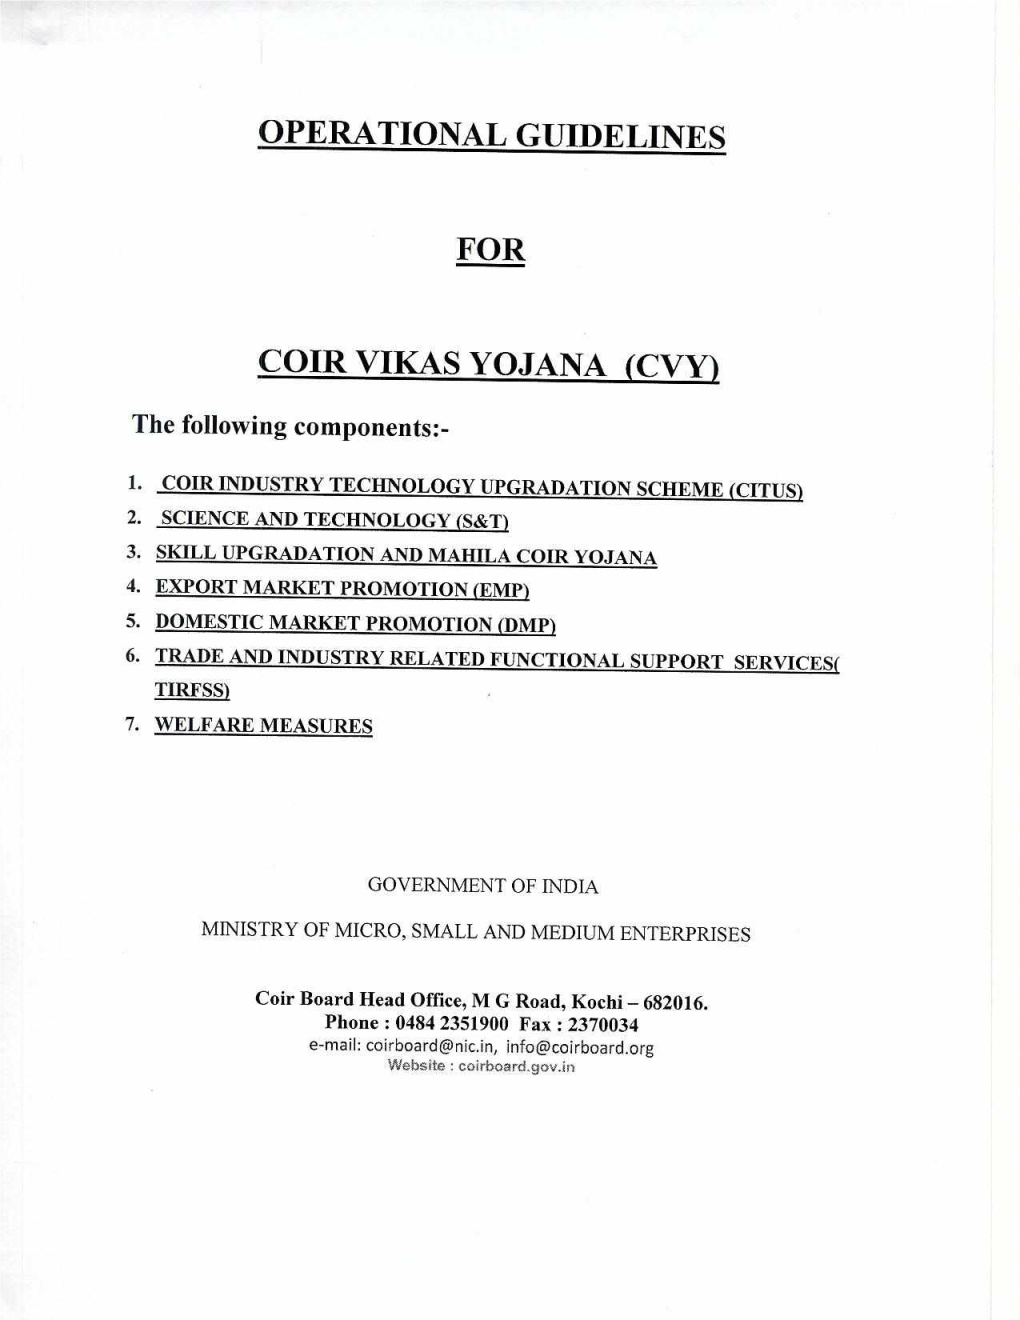 Operational Guidelines for Coir Vikas Yojana (Cvy)